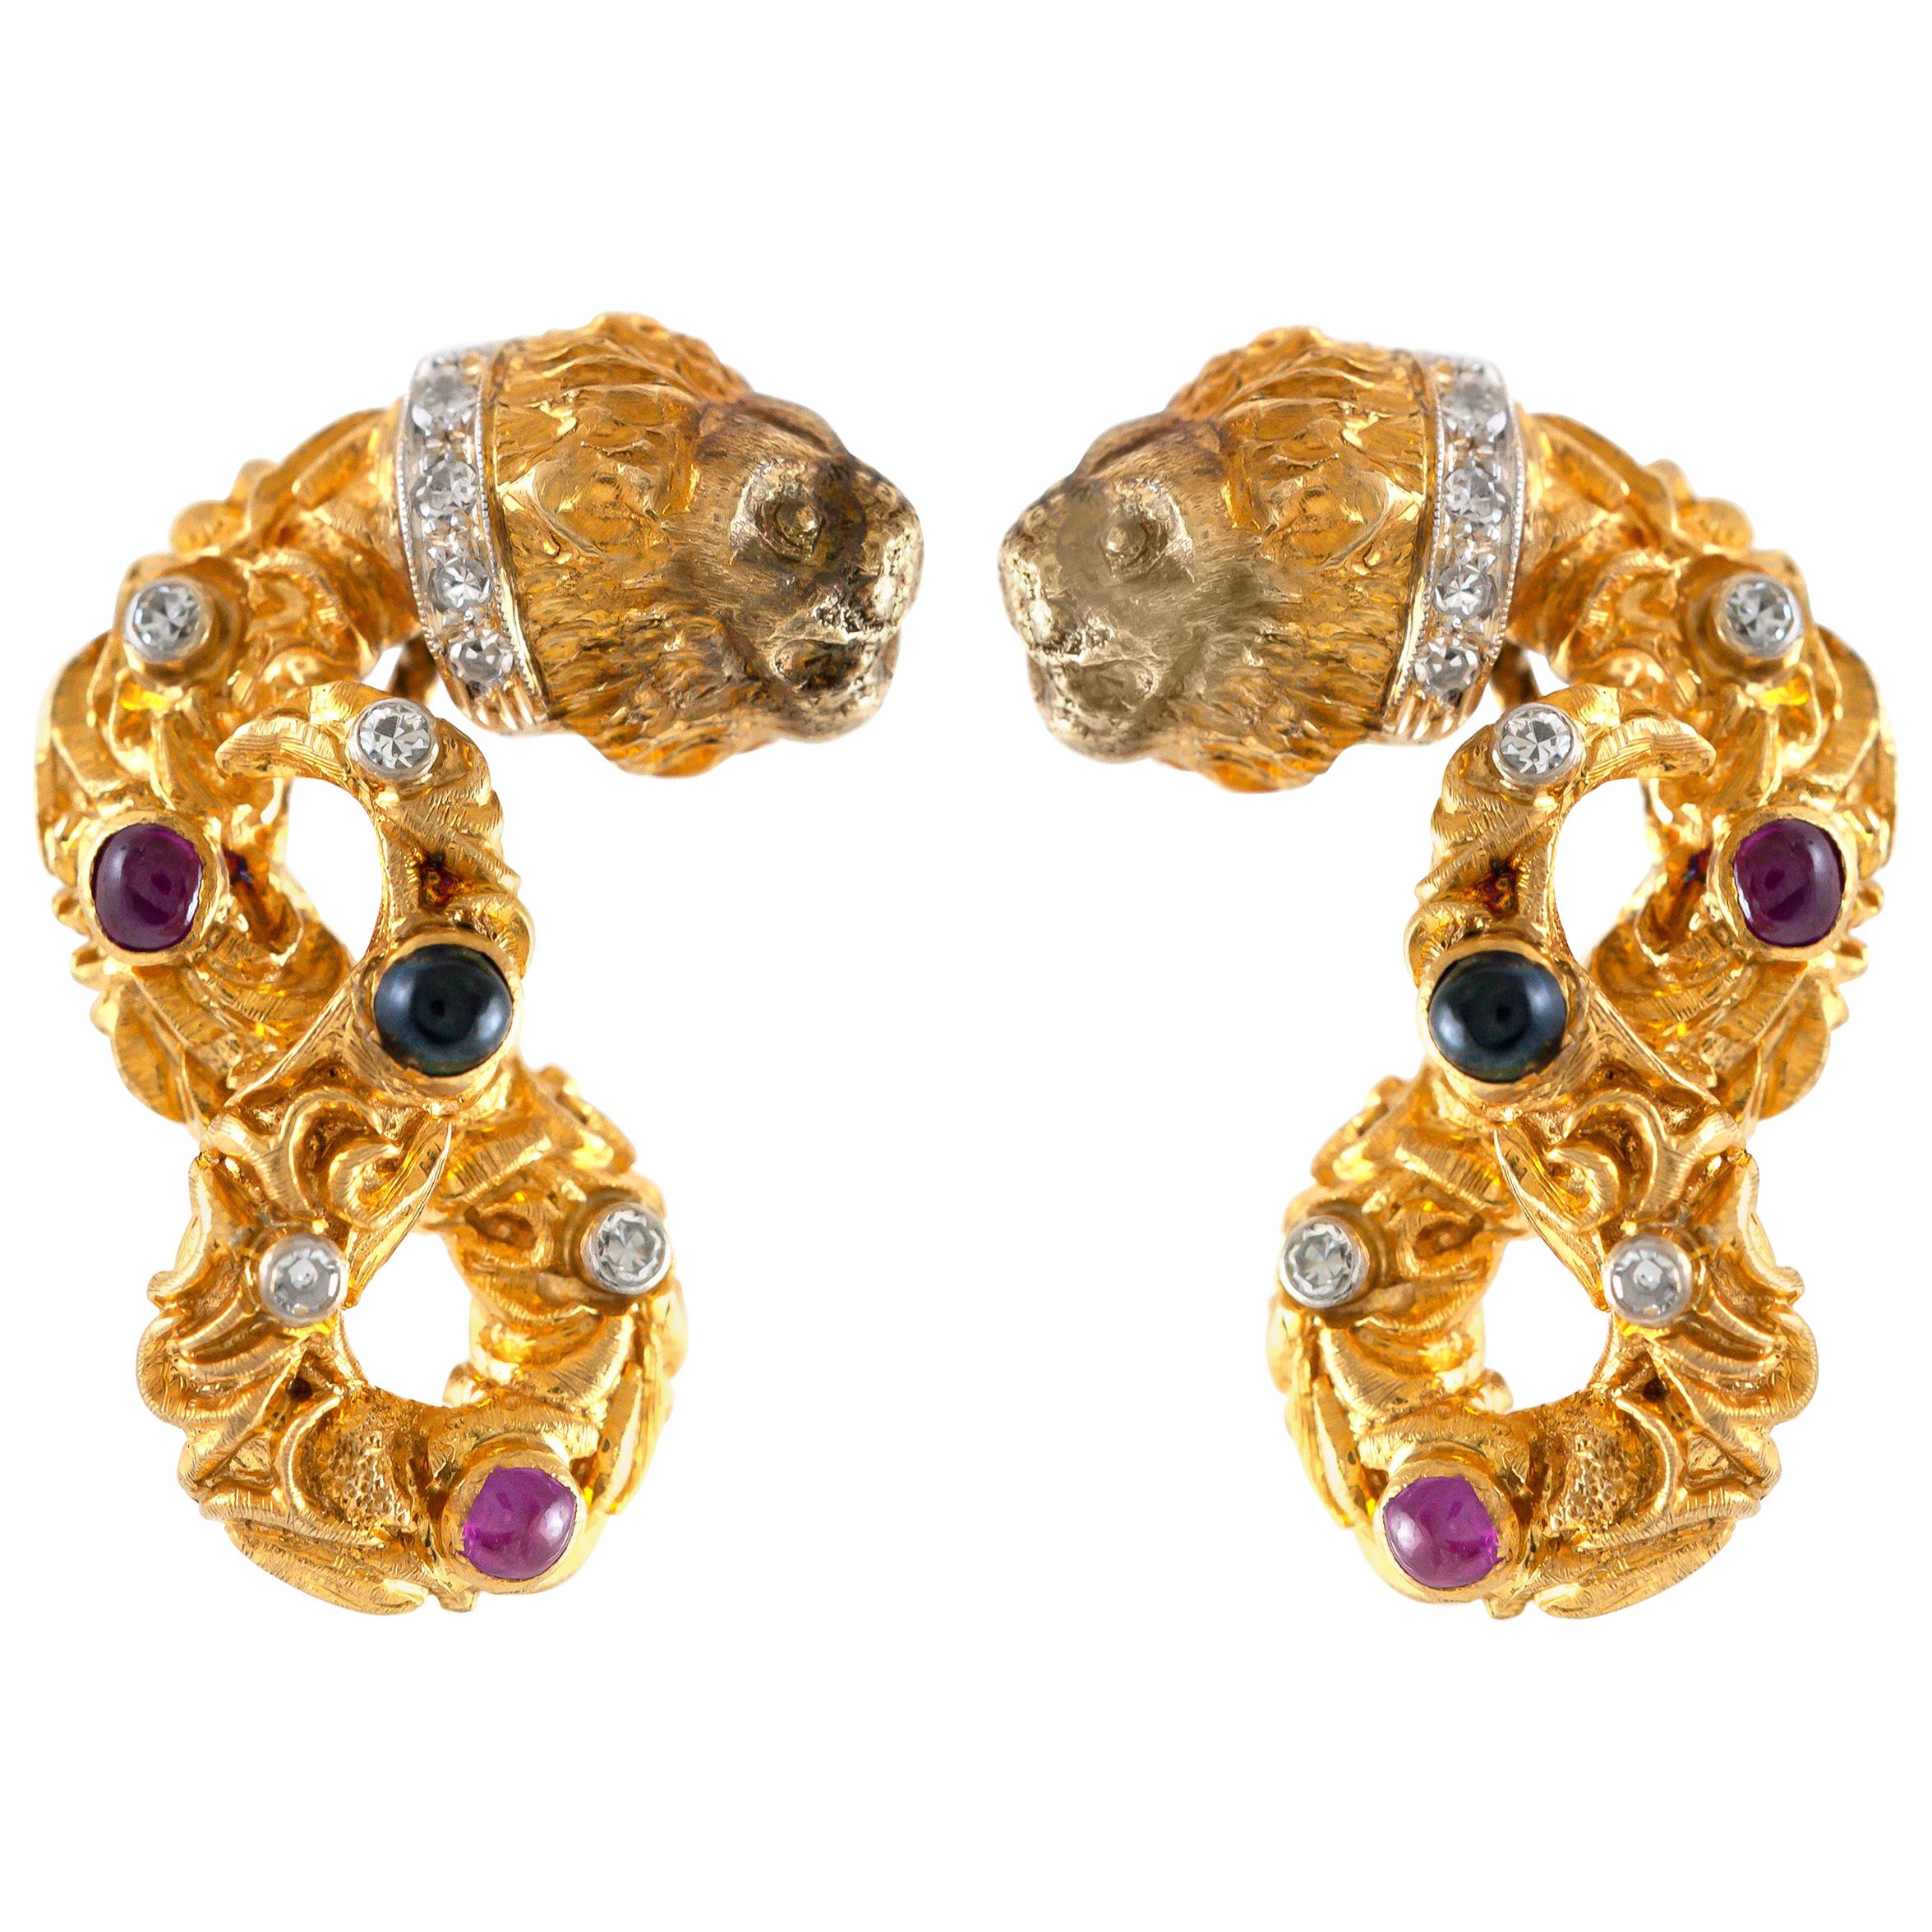 18 Karat Zolotas with Diamonds Ruby and Emerald Earrings